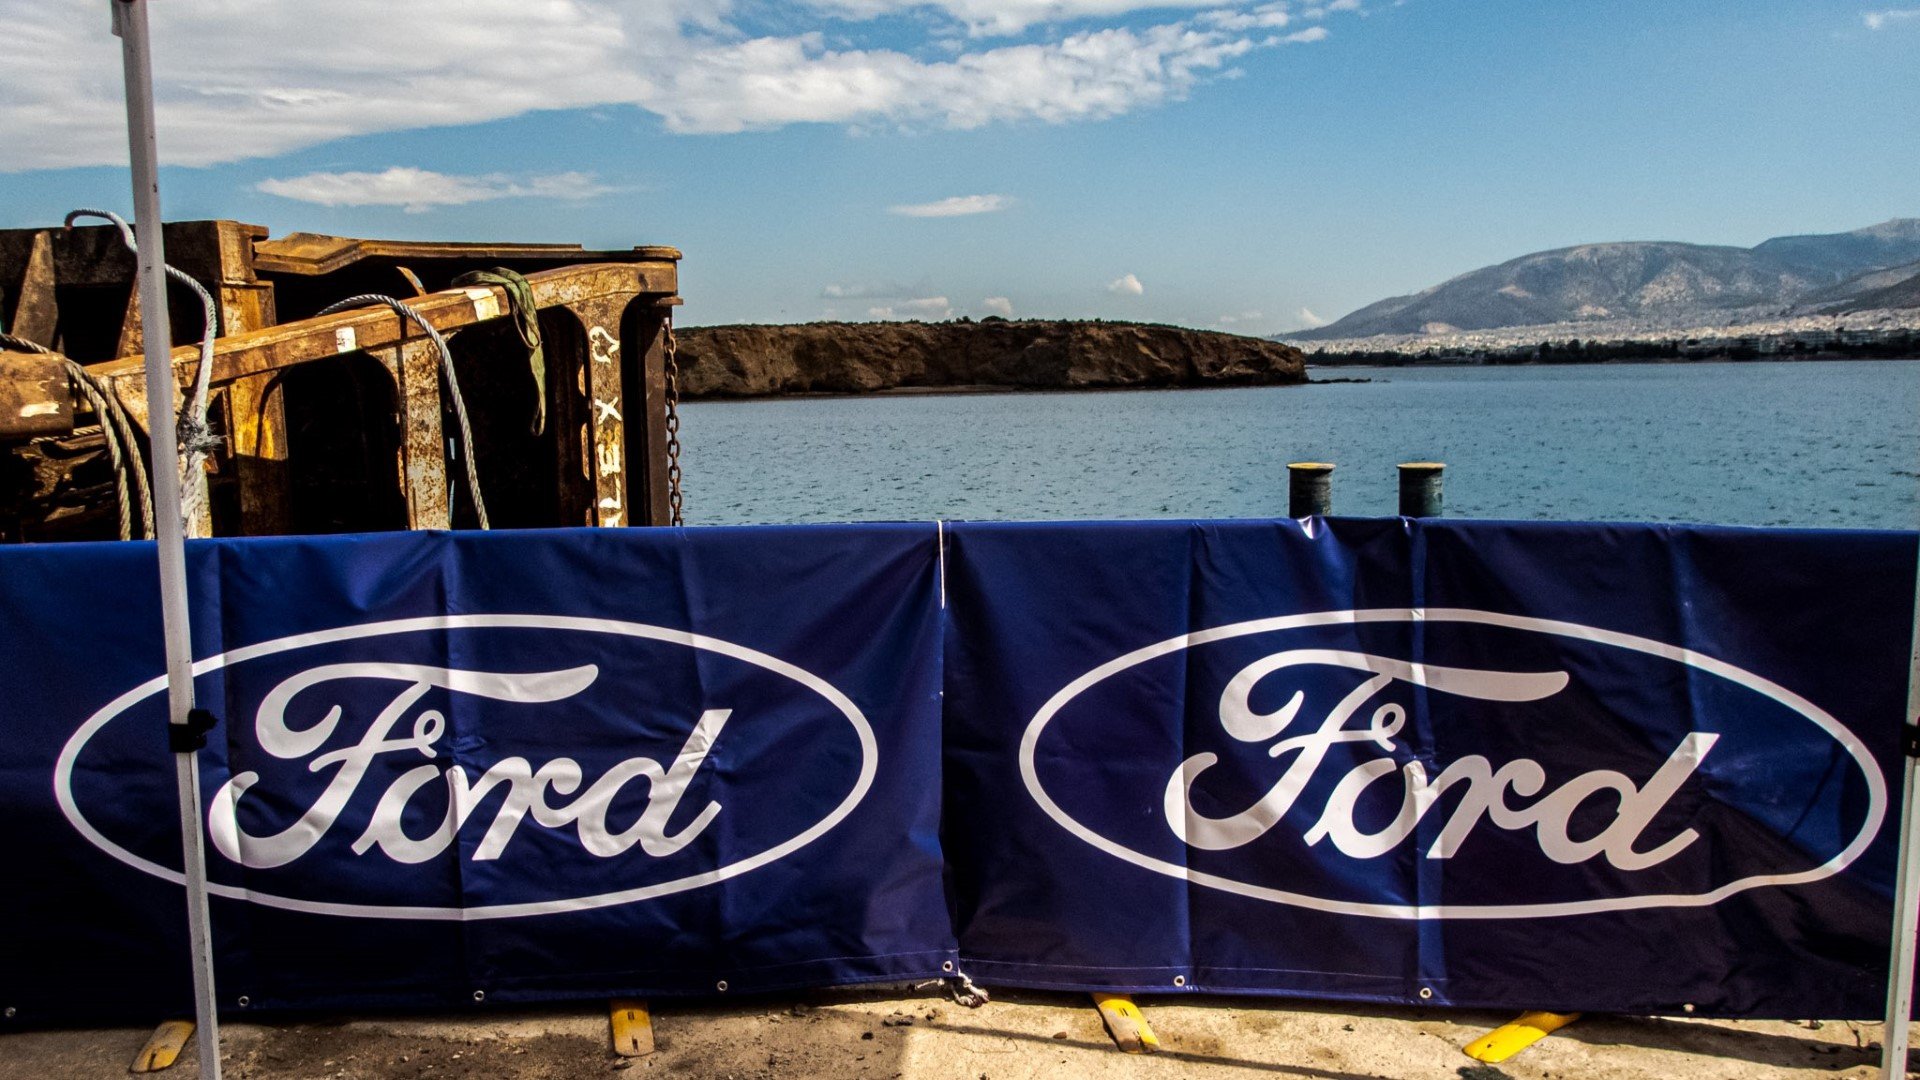 Ford Motor Ελλάς: Στόχος οι καθαρότερες θάλασσες